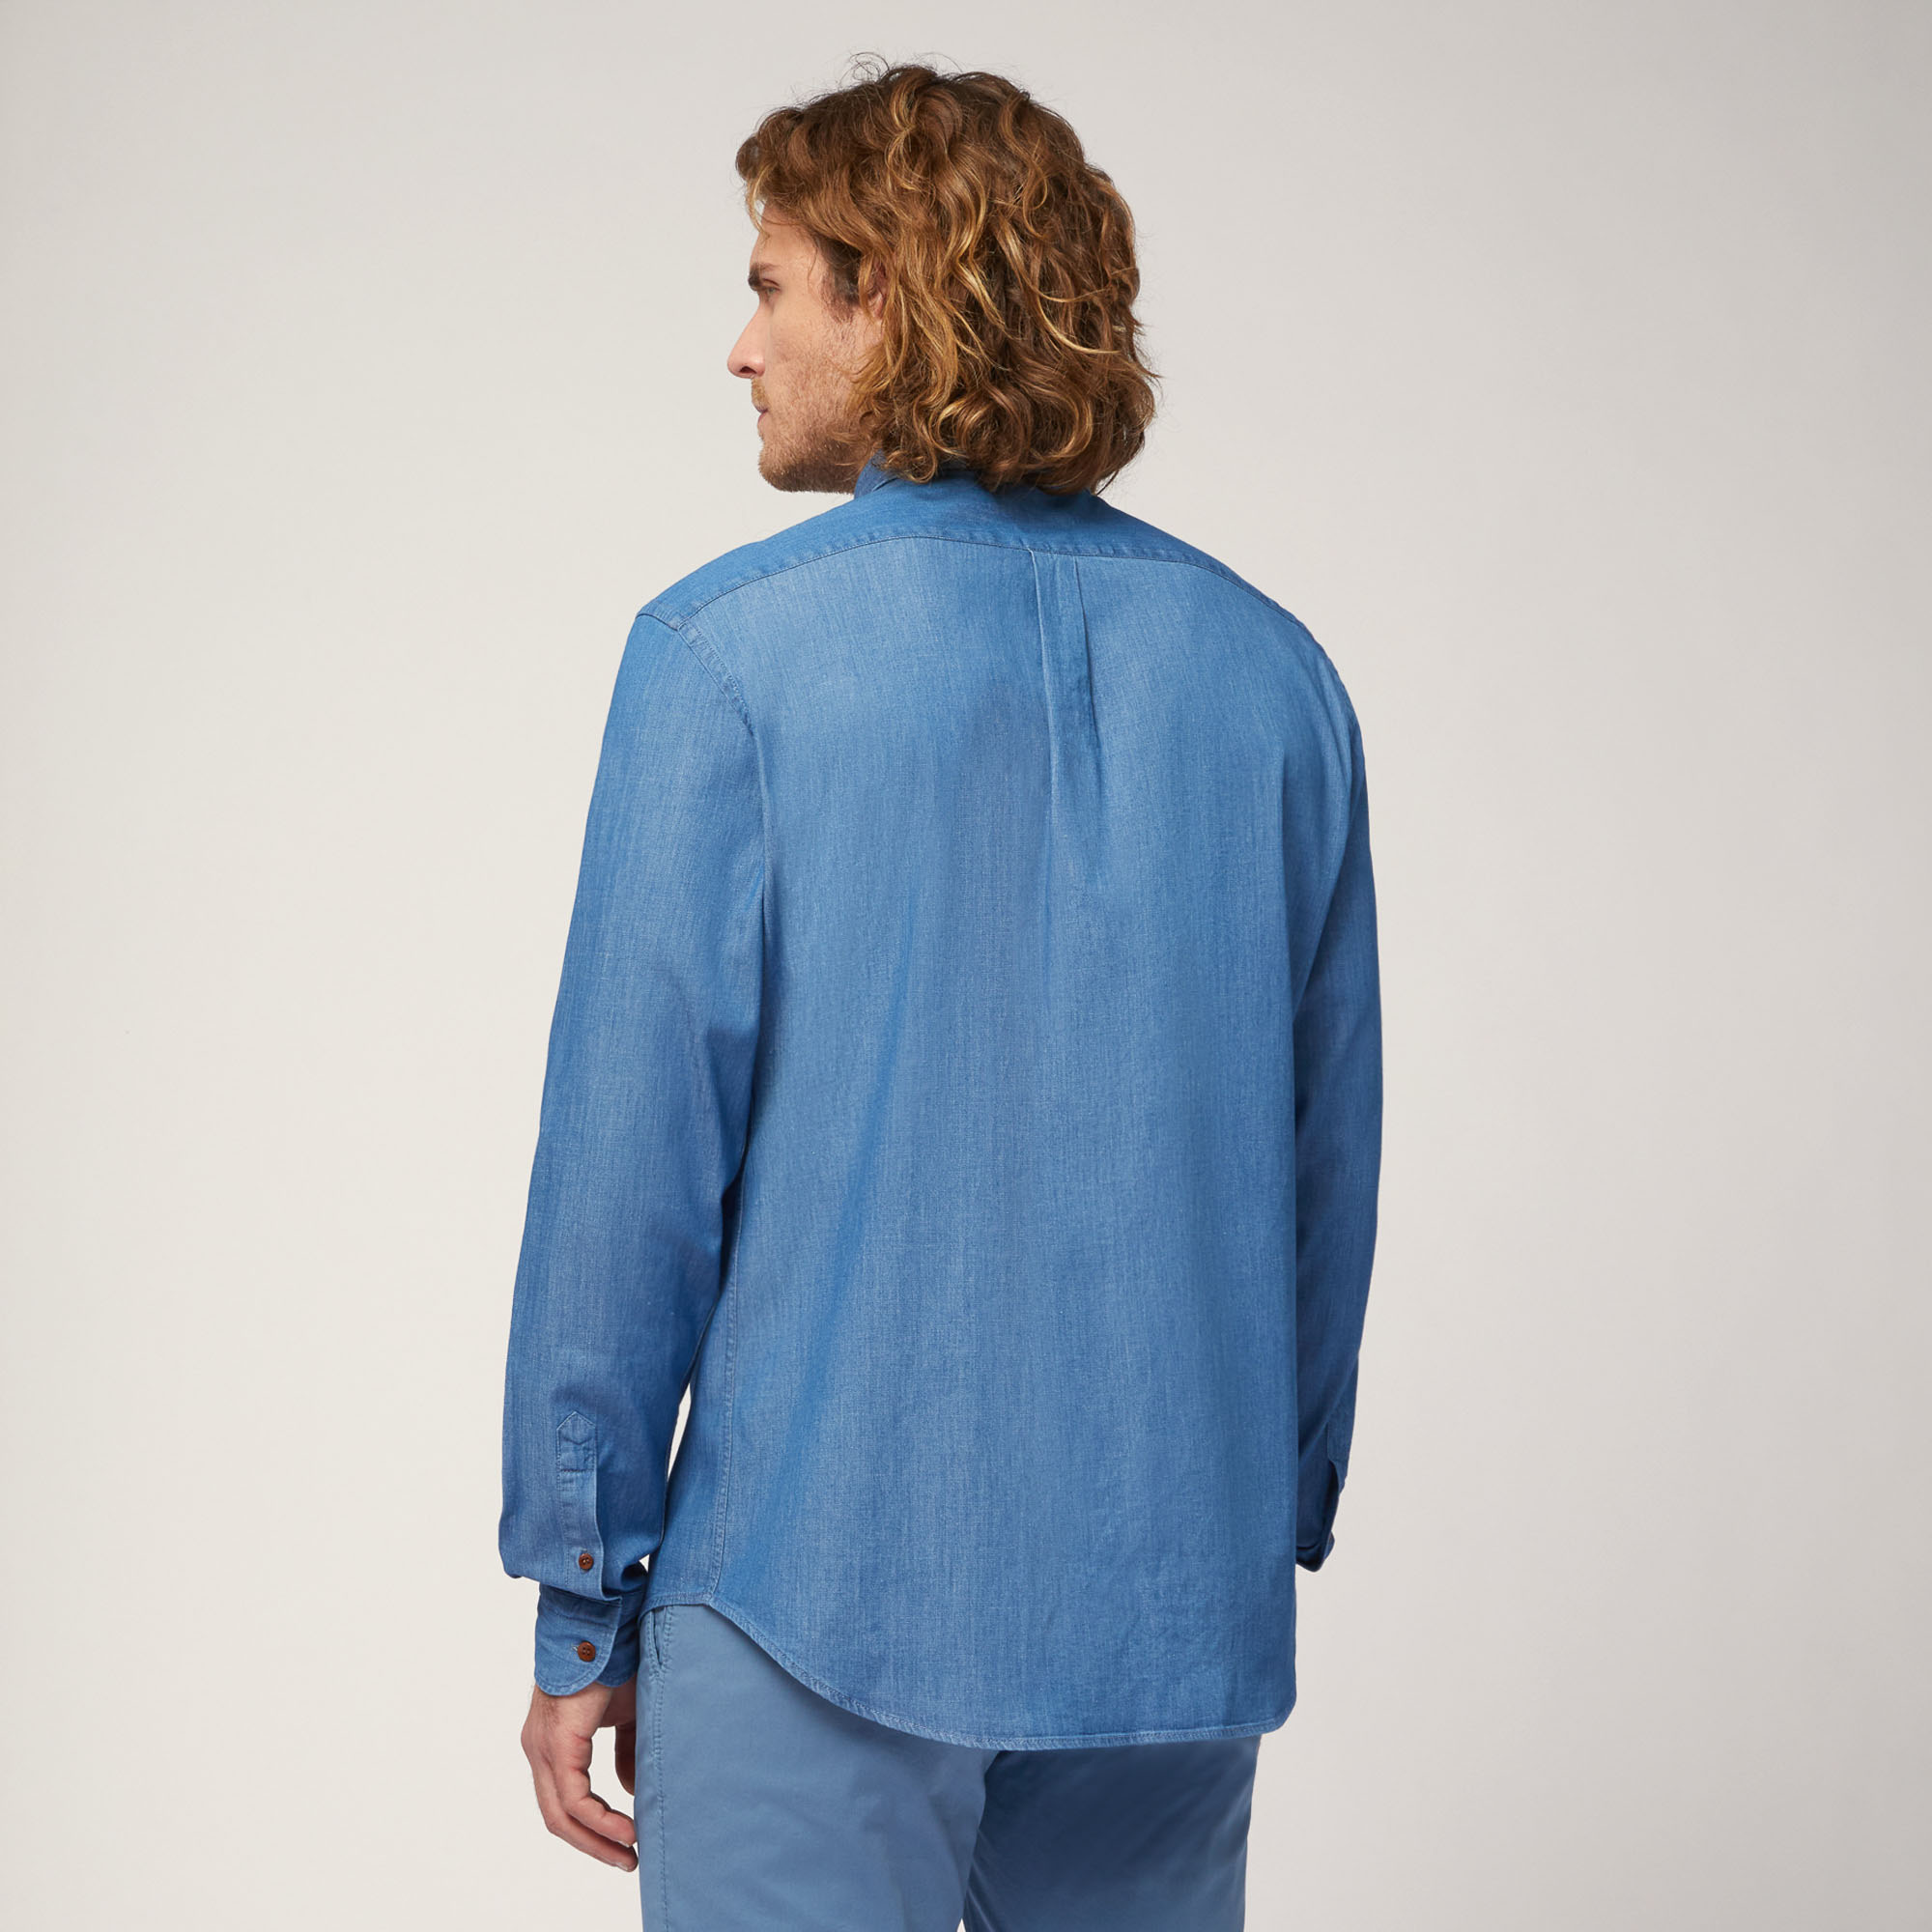 Denim-Hemd aus Stretch-Baumwolle, Blau, large image number 1